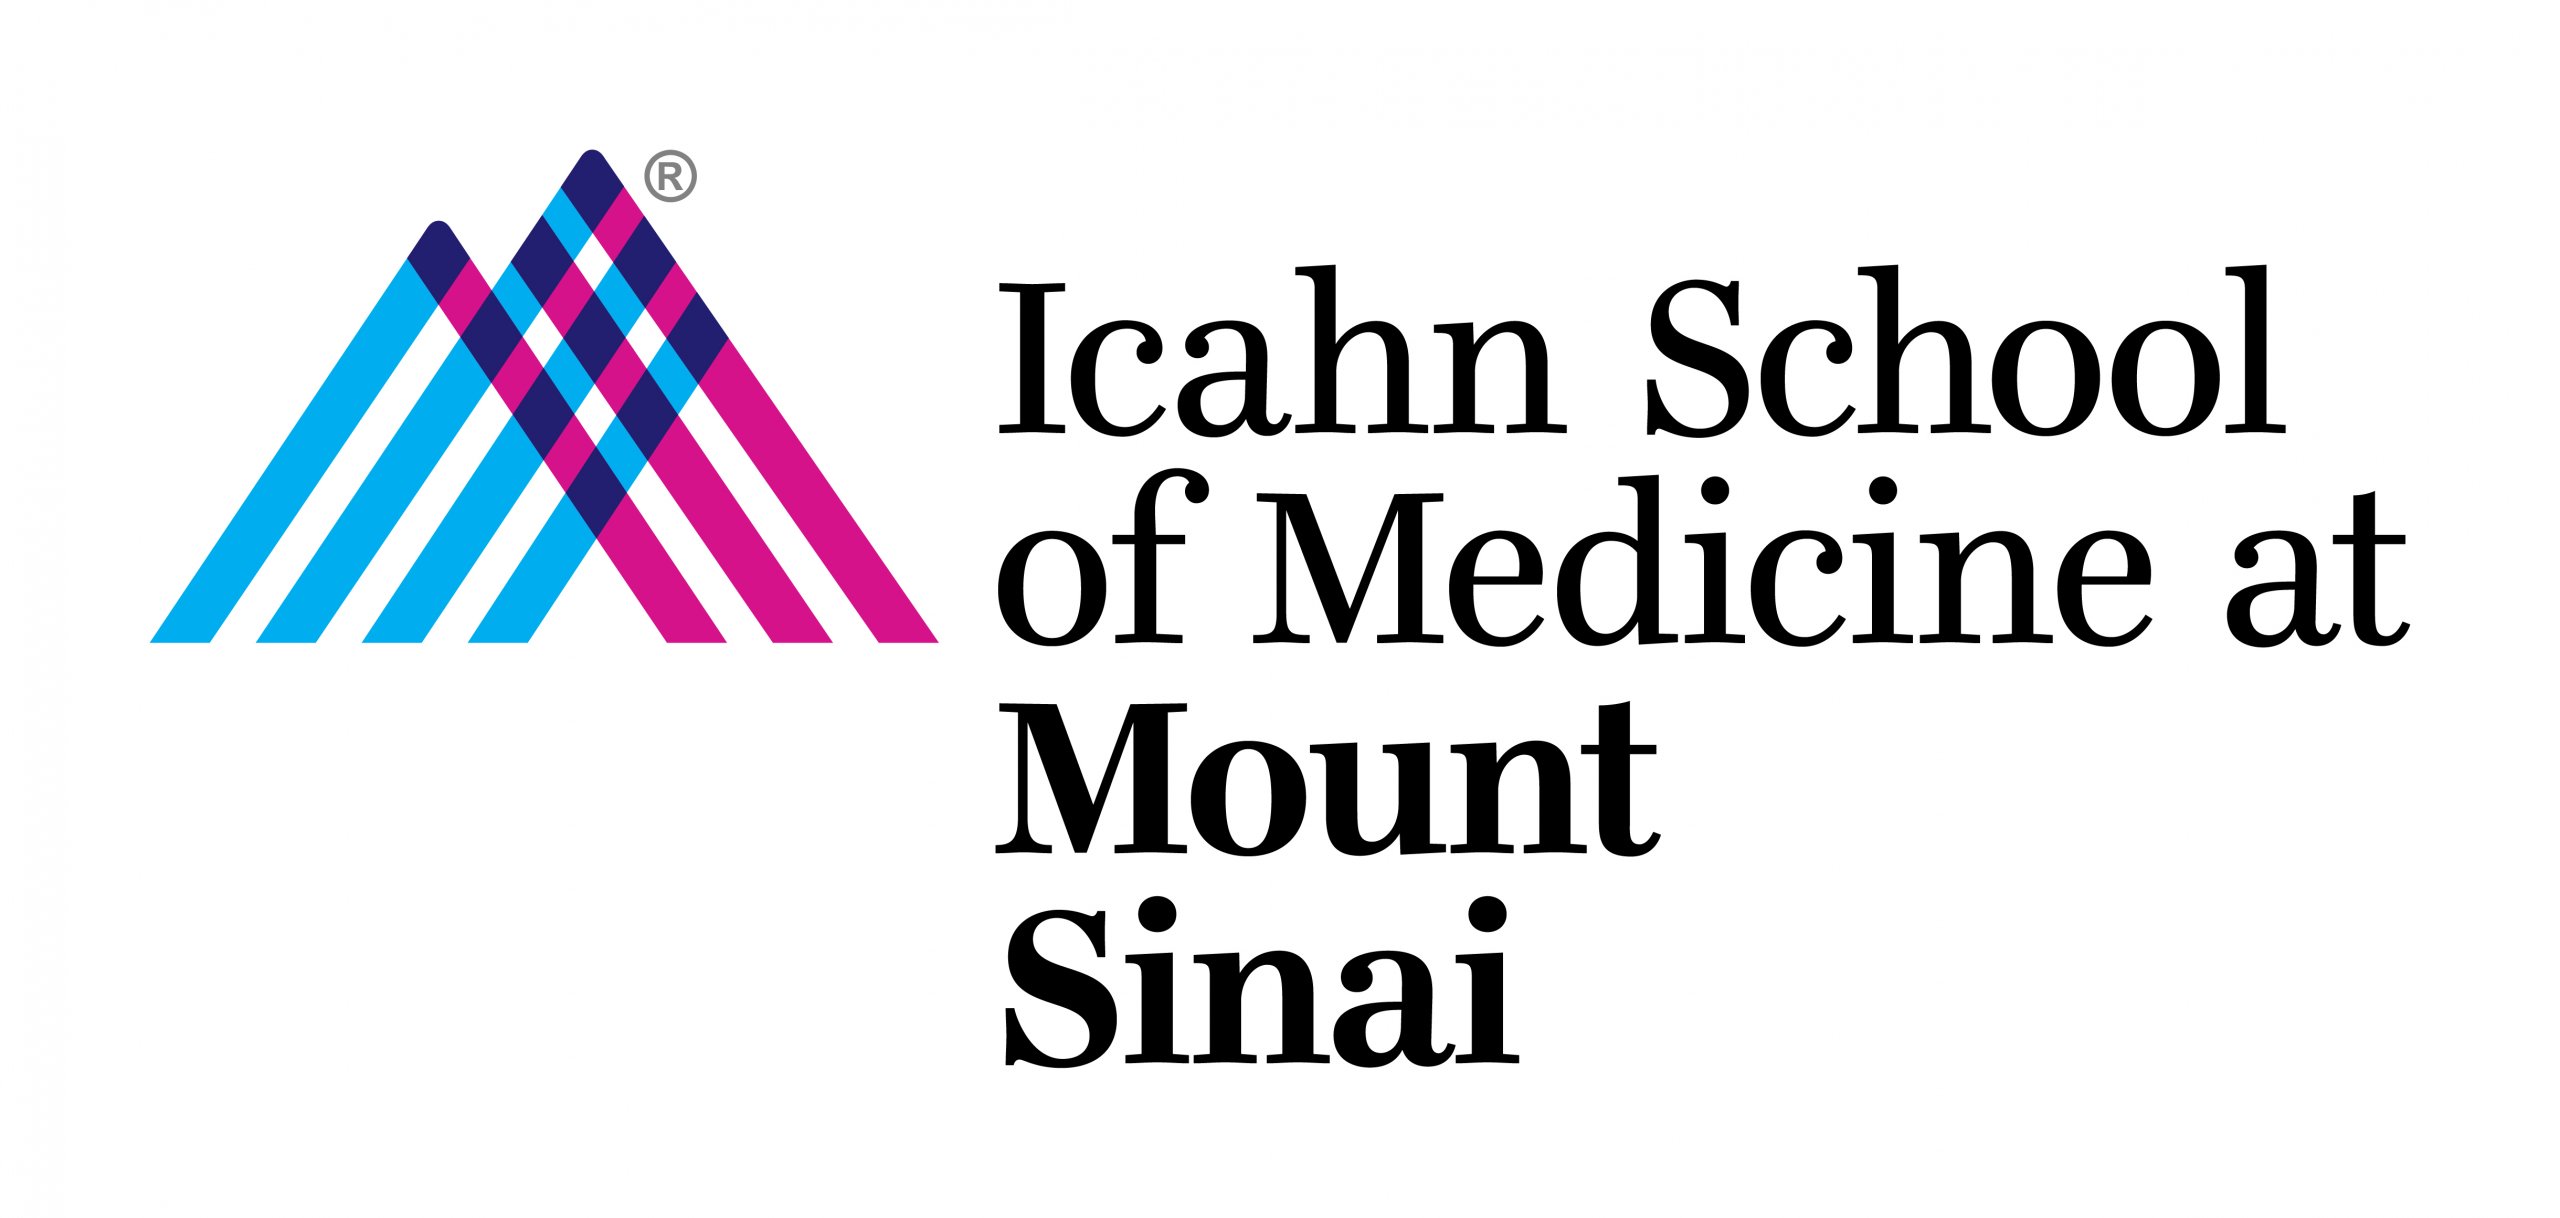 Icahn School of Medicine at Mount Sinai logo.